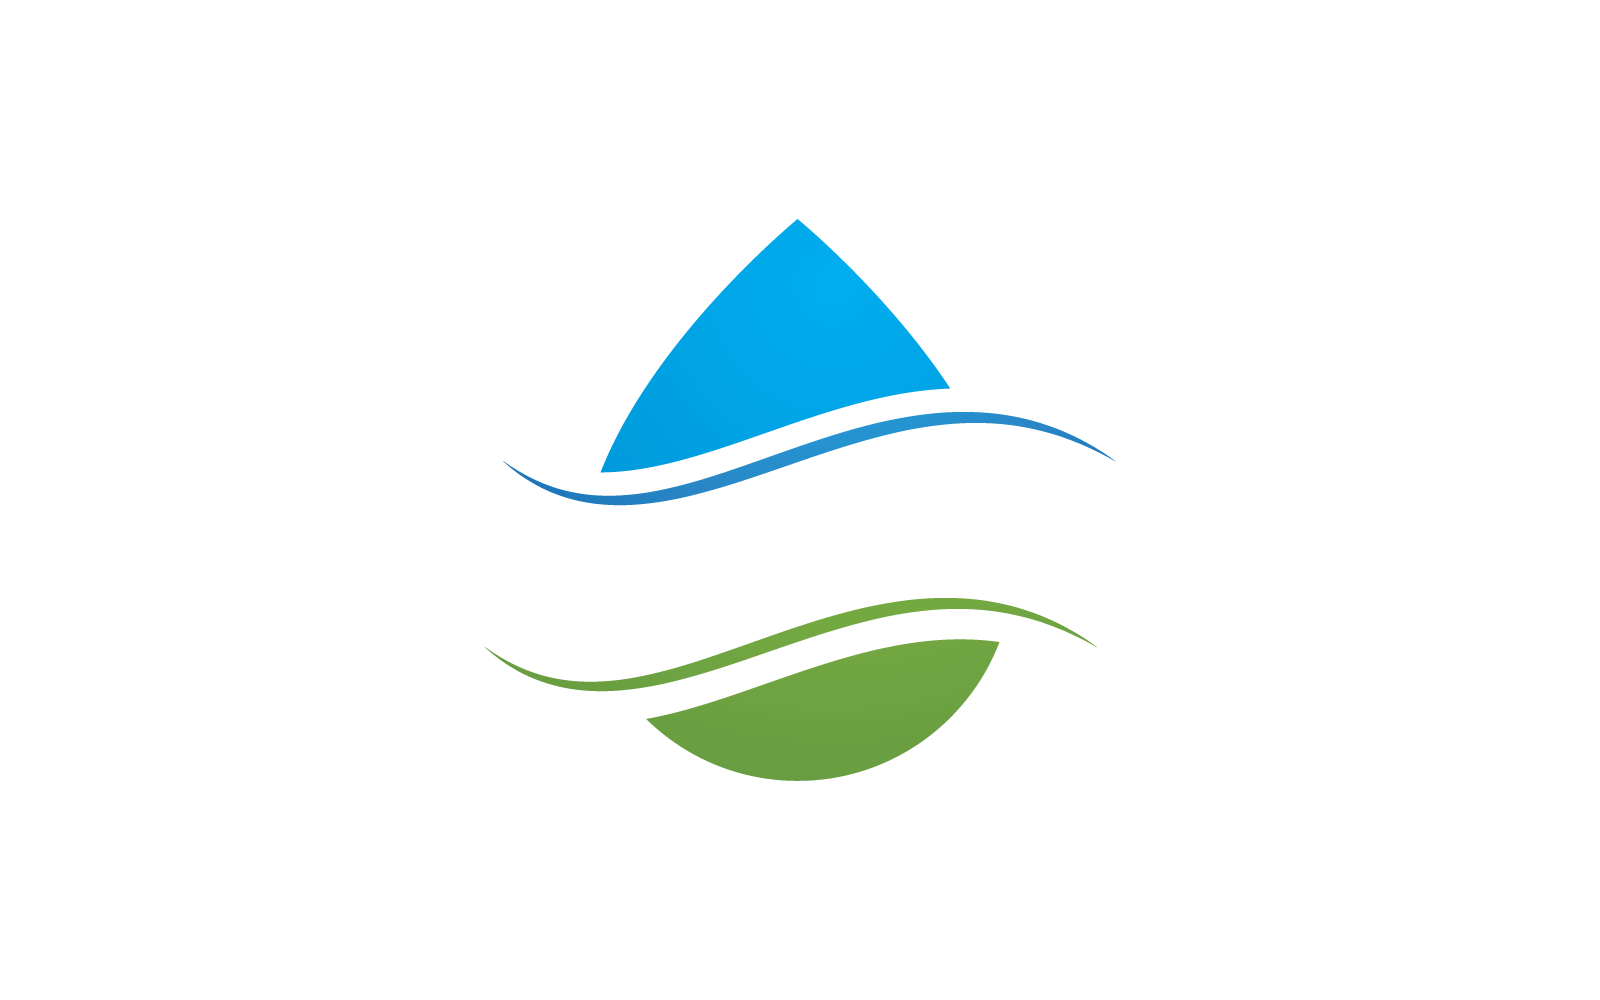 Water drop design logo illustration template